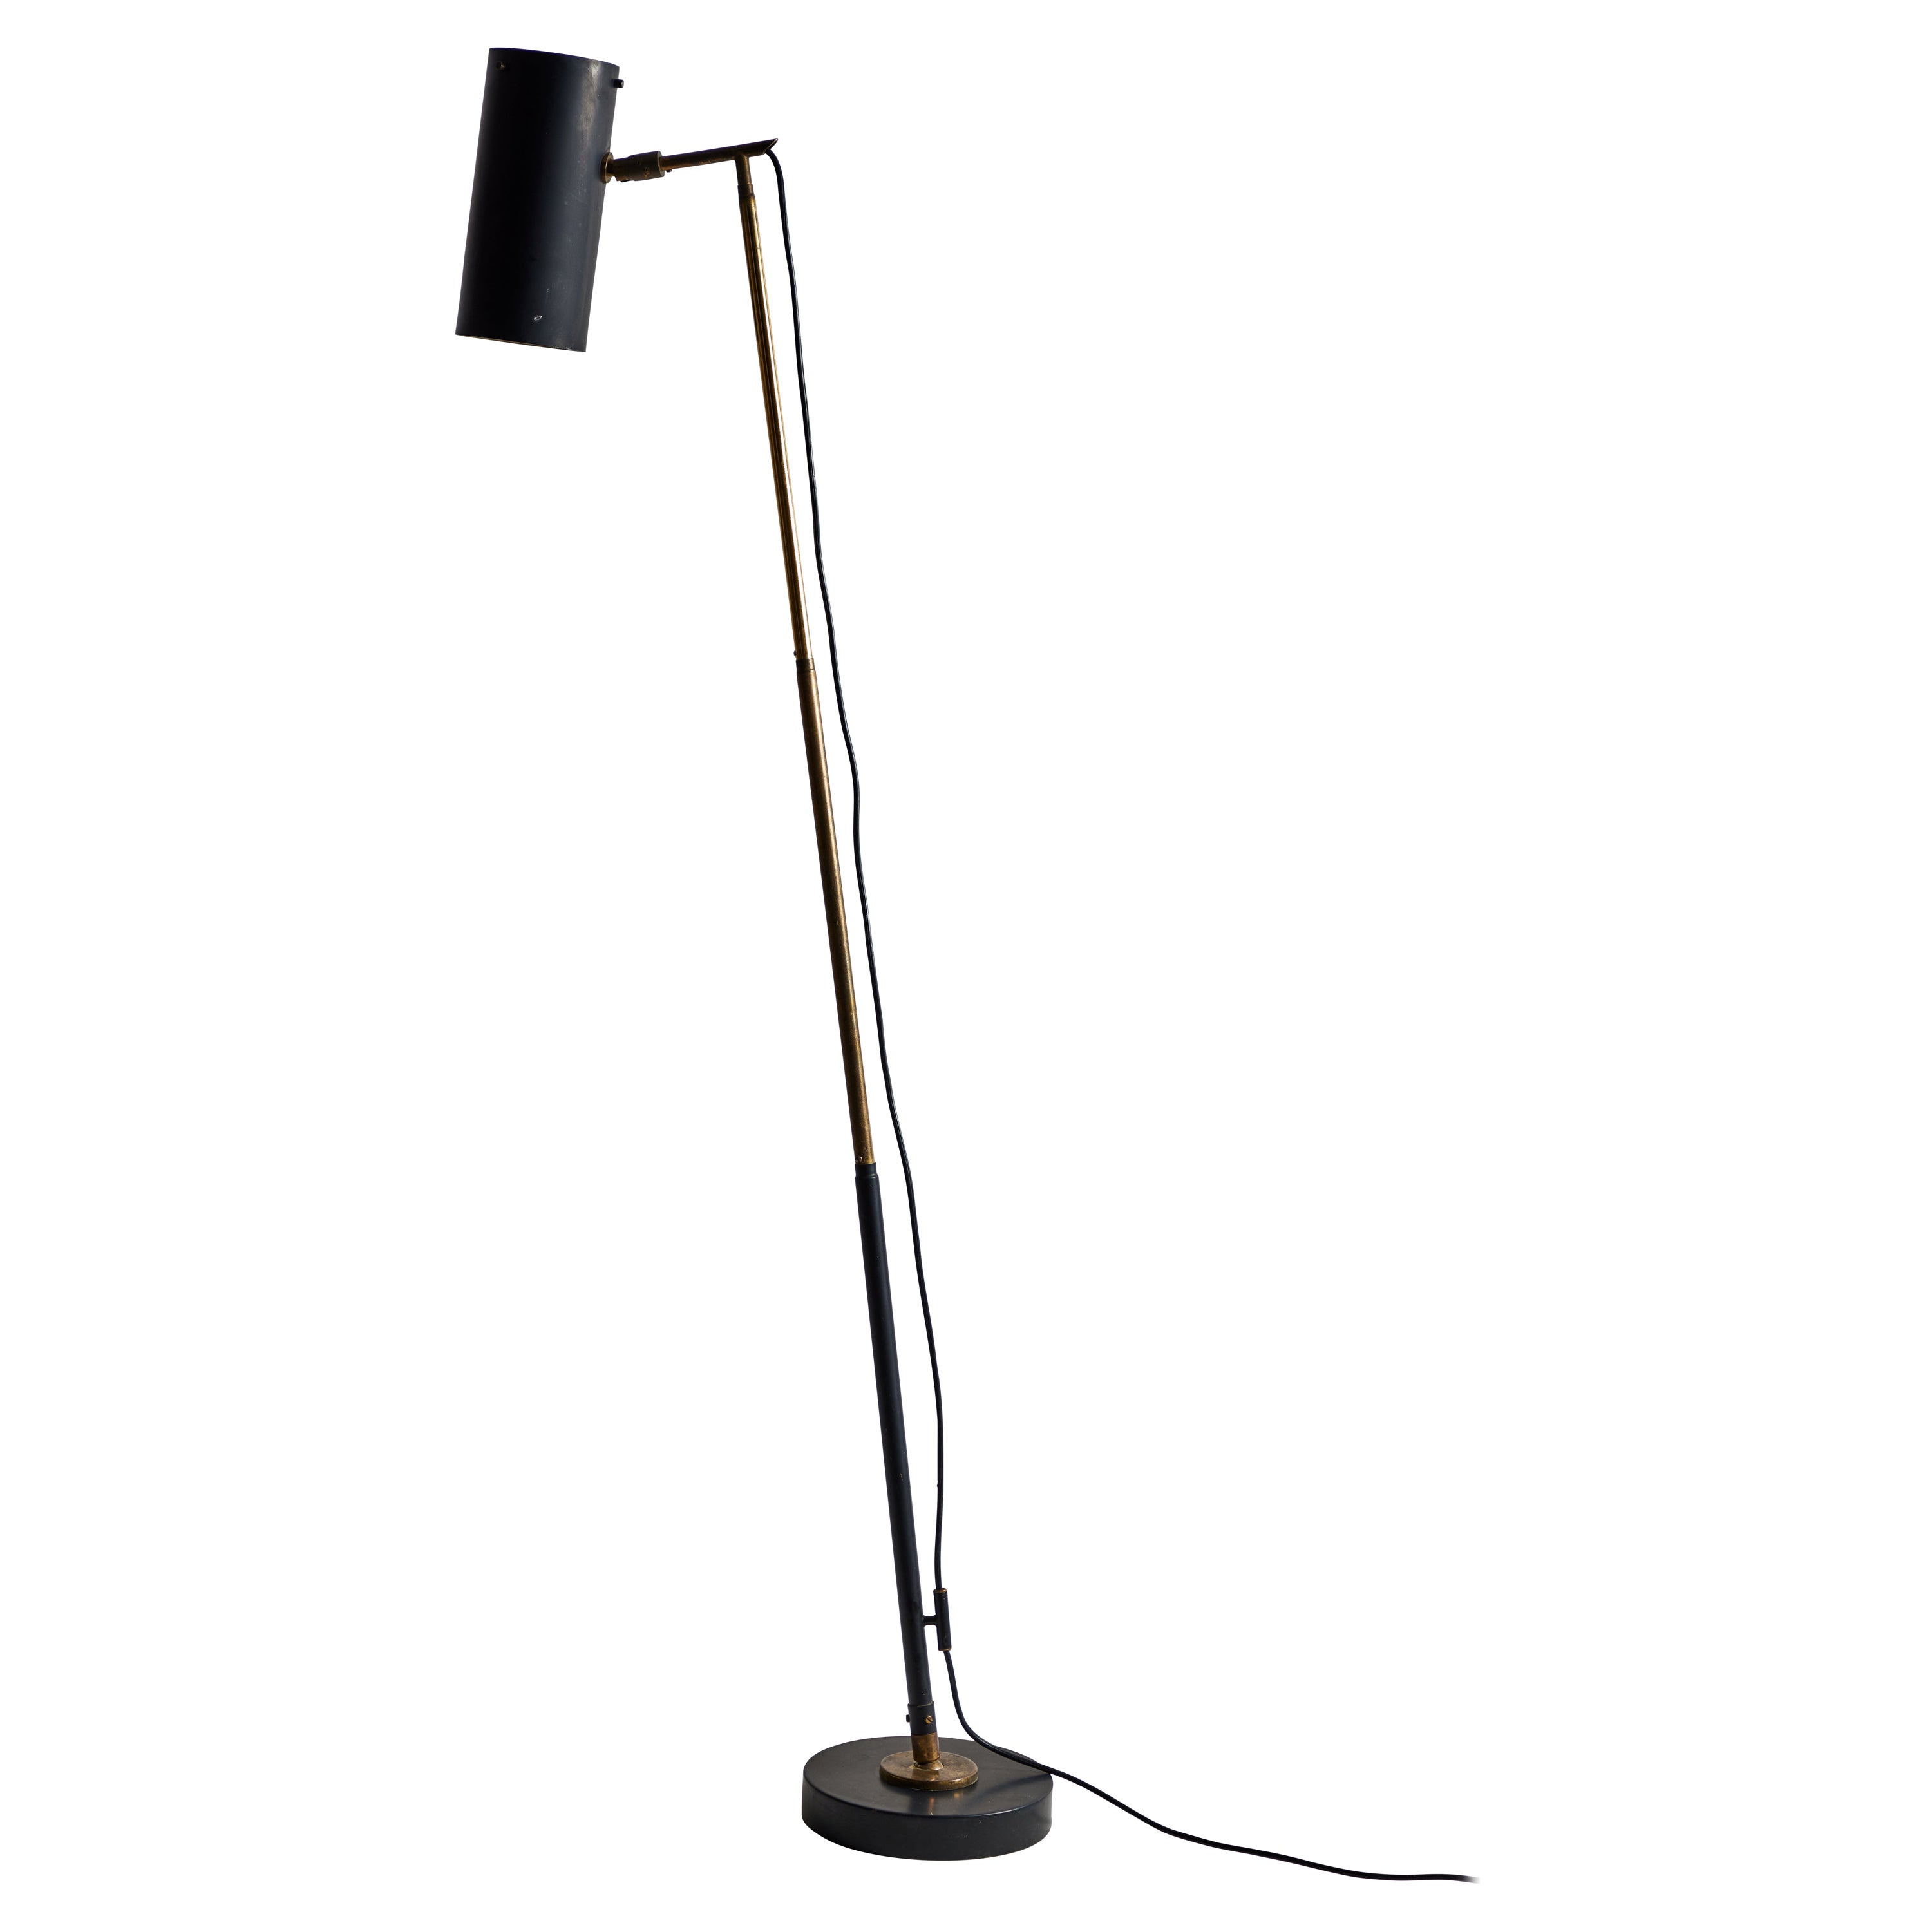 Model 201 Floor/Table Lamp by Ostuni & Forti for Oluce